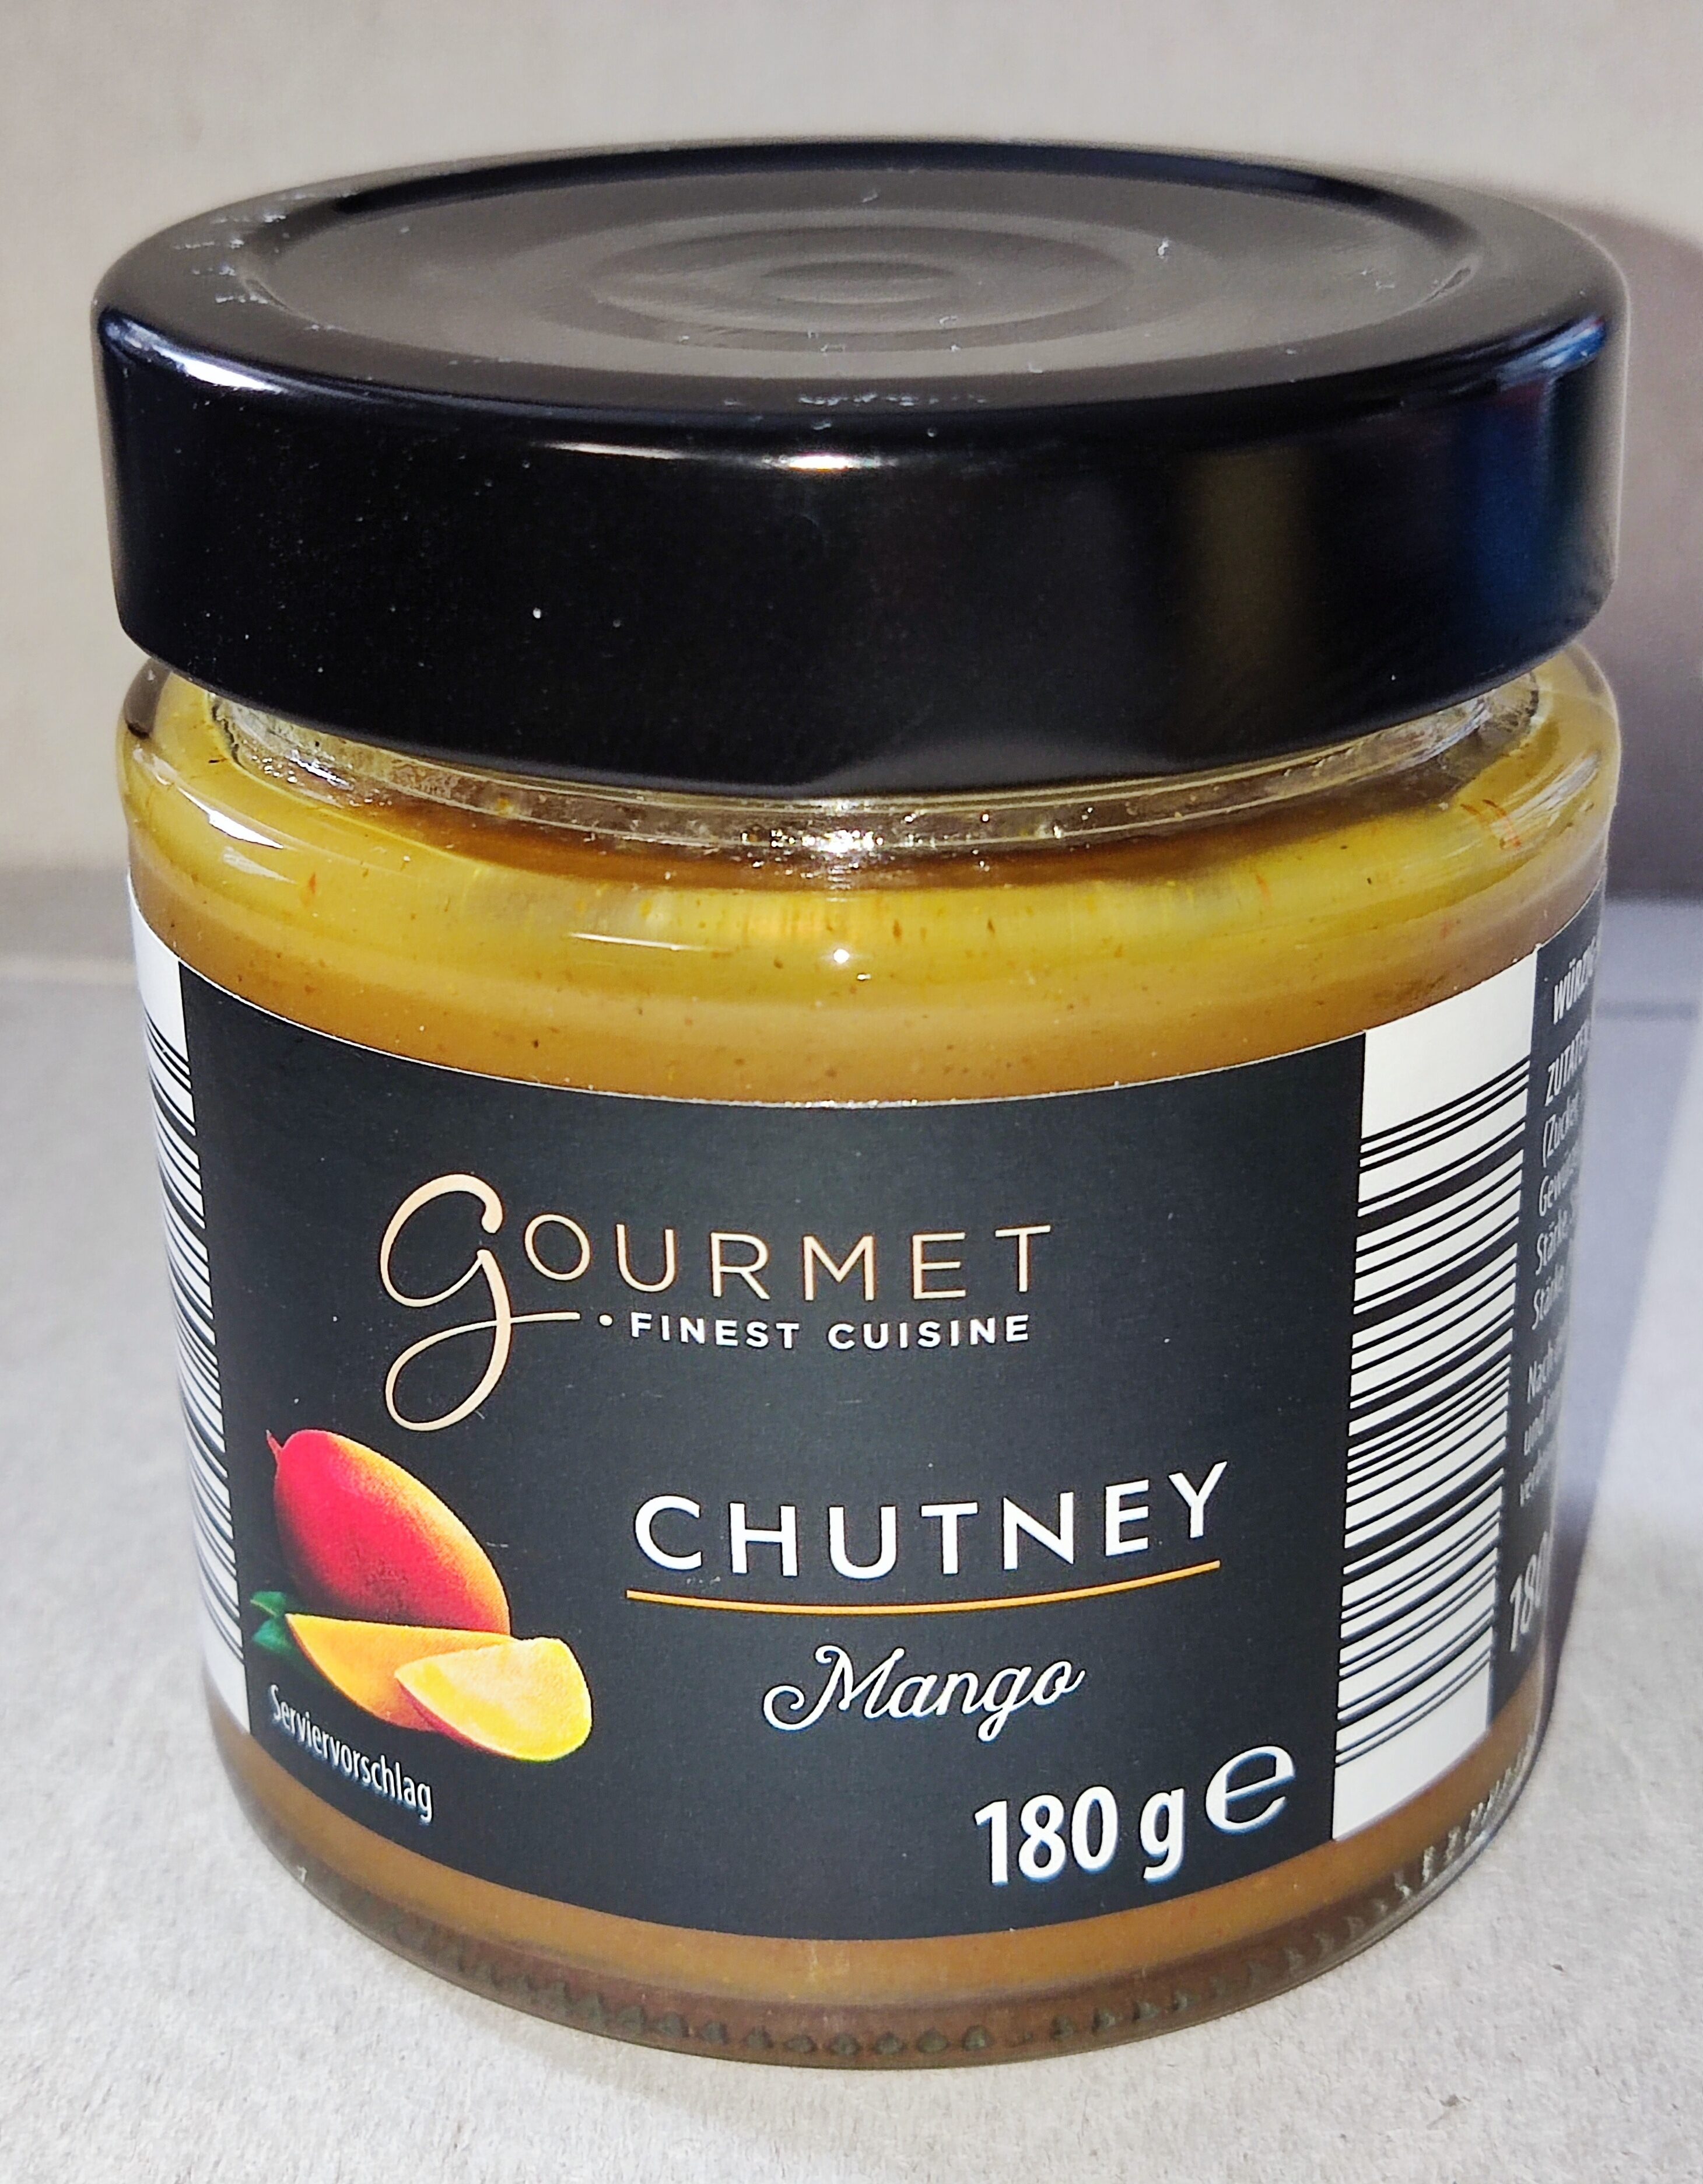 Chutney - Mango - Product - de